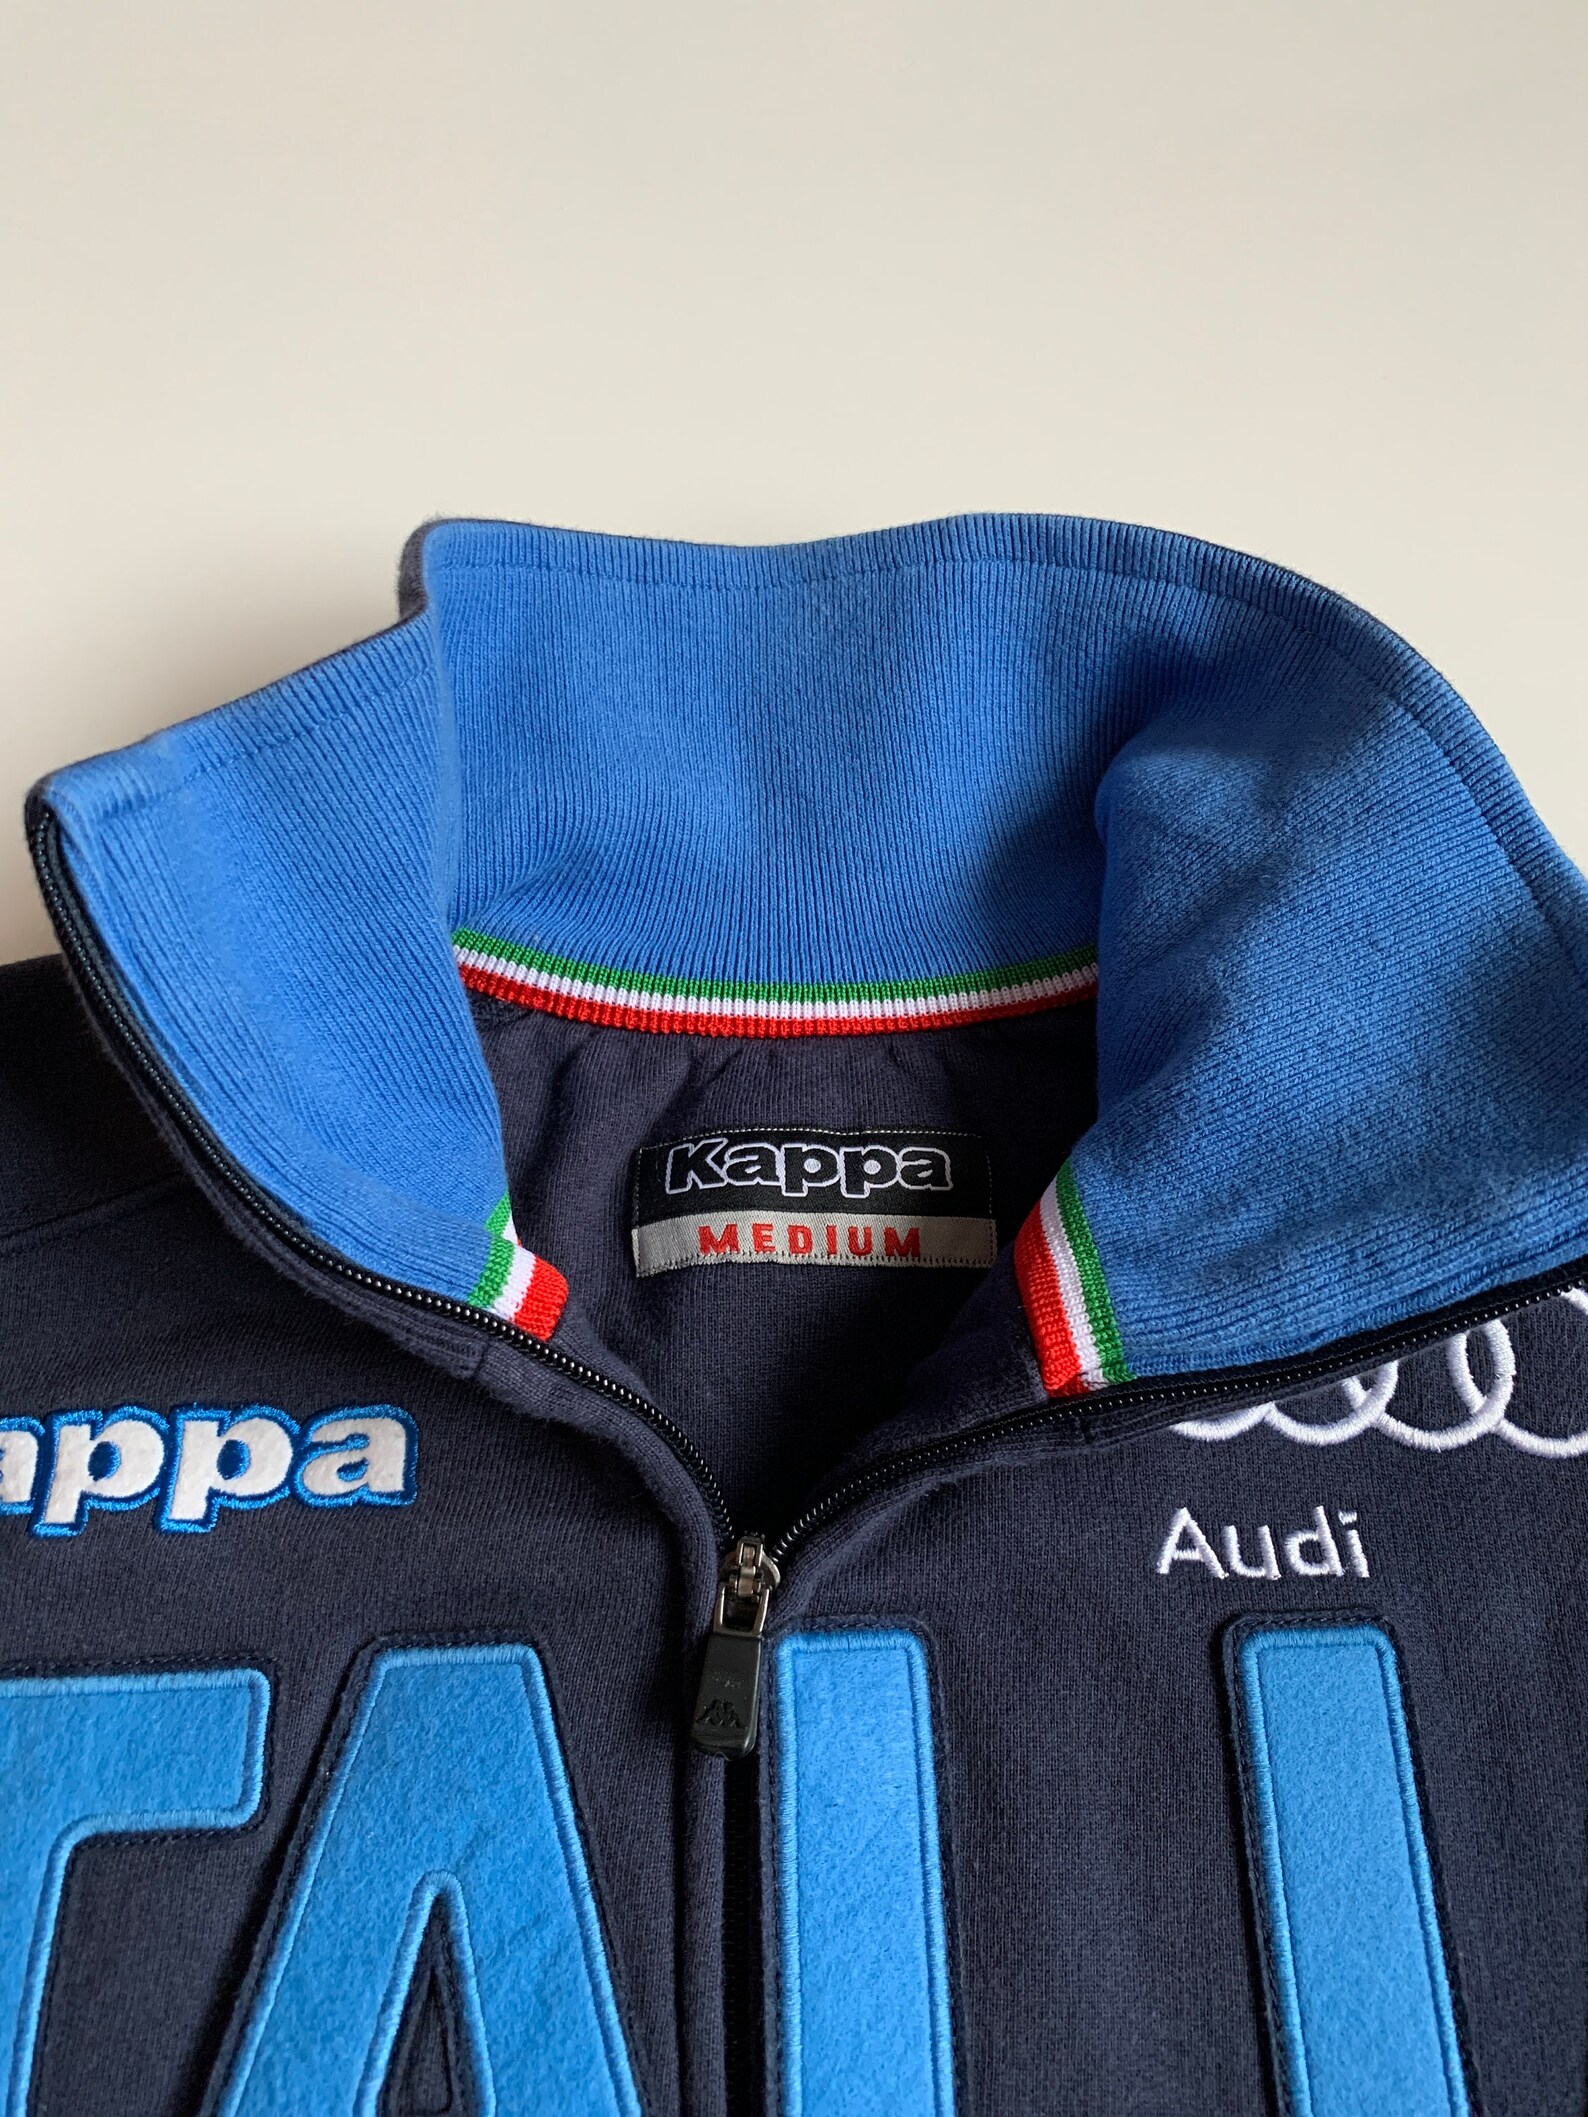 Kappa Italy FISI Men's Jacket Size M Dark Blue | Etsy